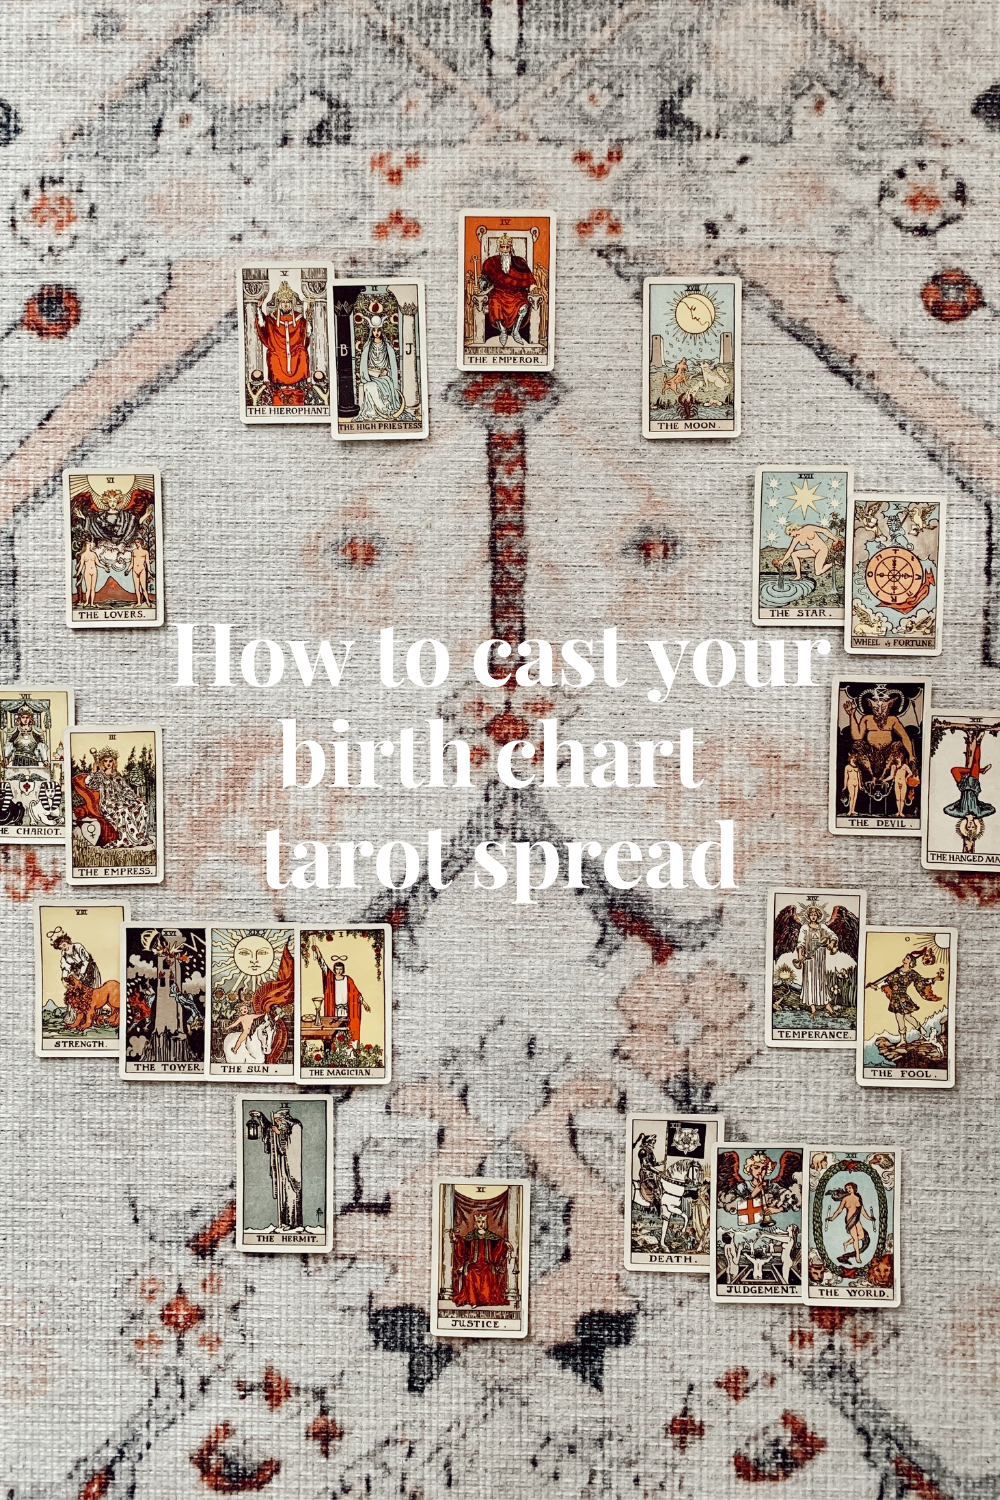 Birth chart tarot spread